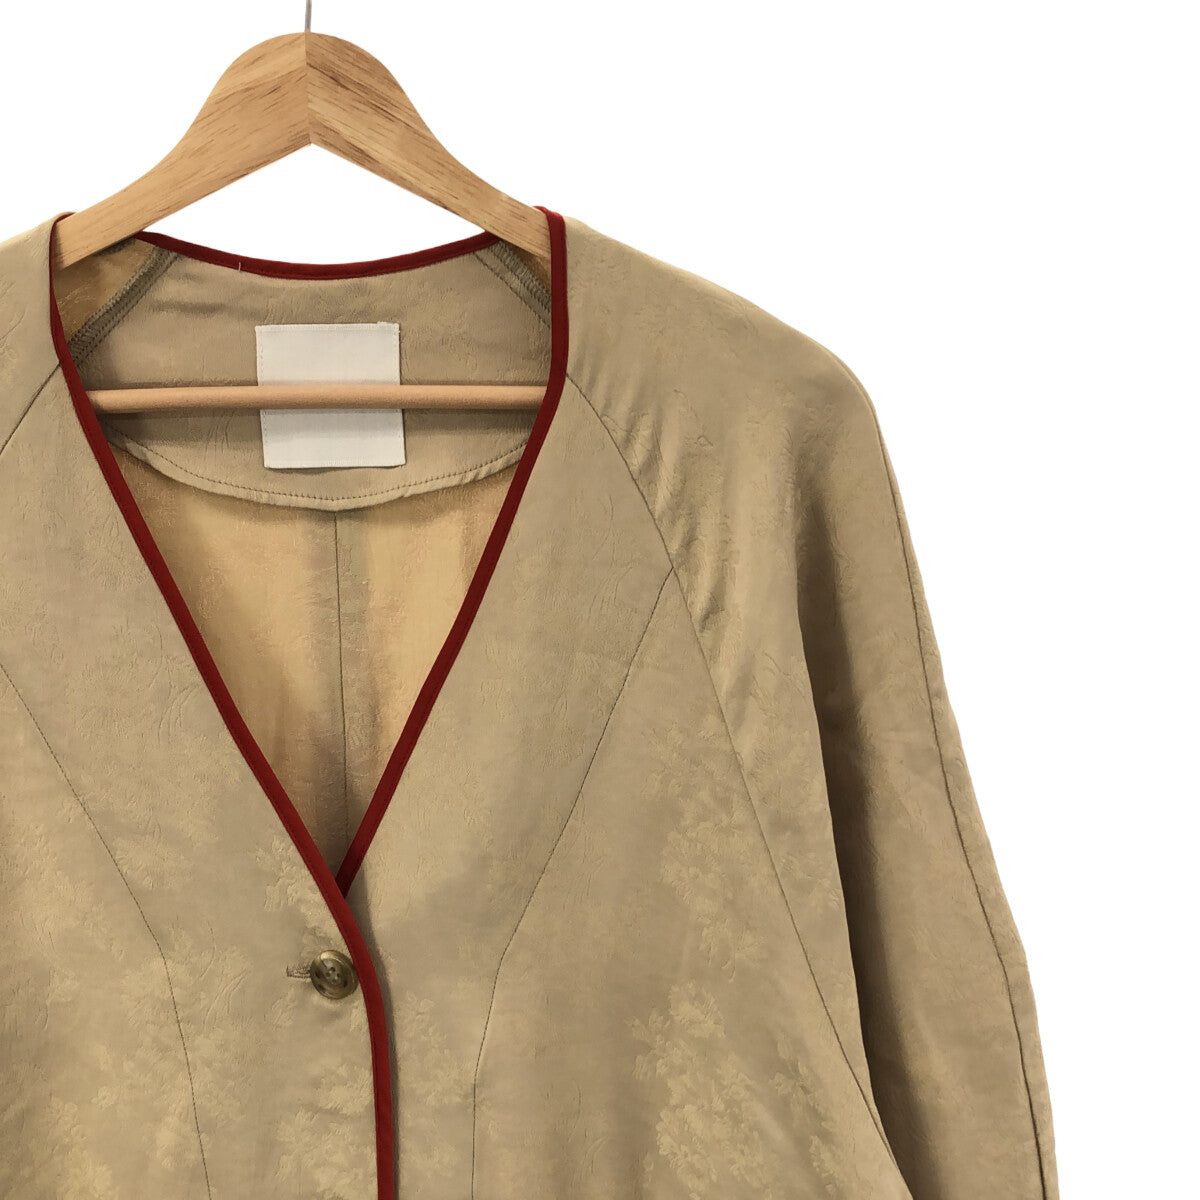 CLANE / クラネ | 2021SS | BOTANICALS JACQUARD DRESS COAT ...